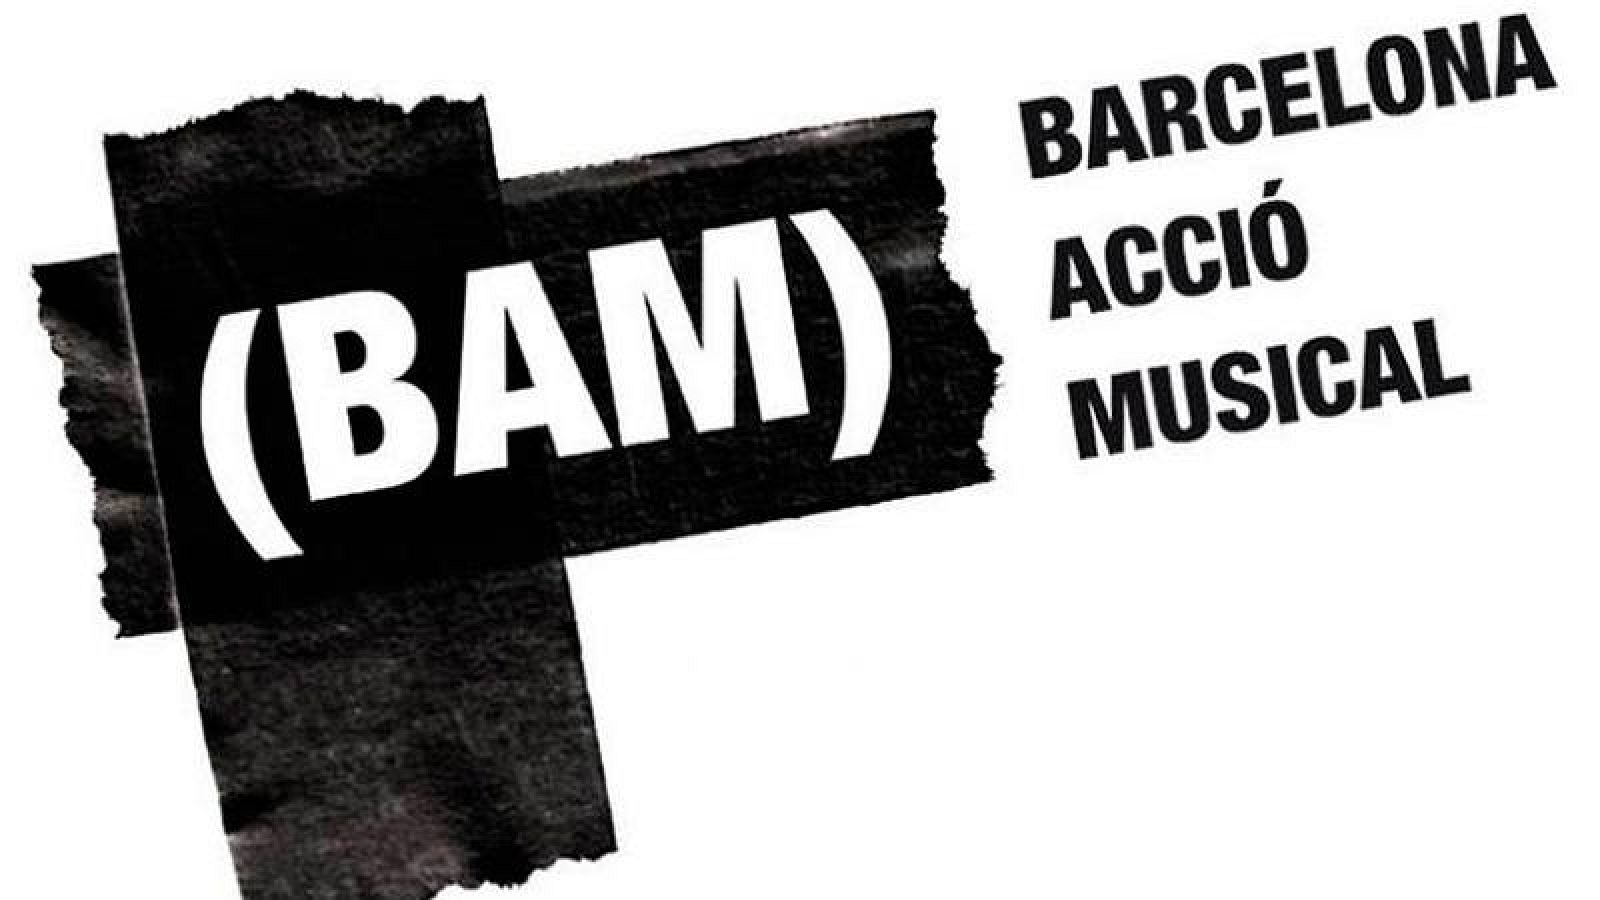  El BAM (Festival Barcelona Acciò musical)